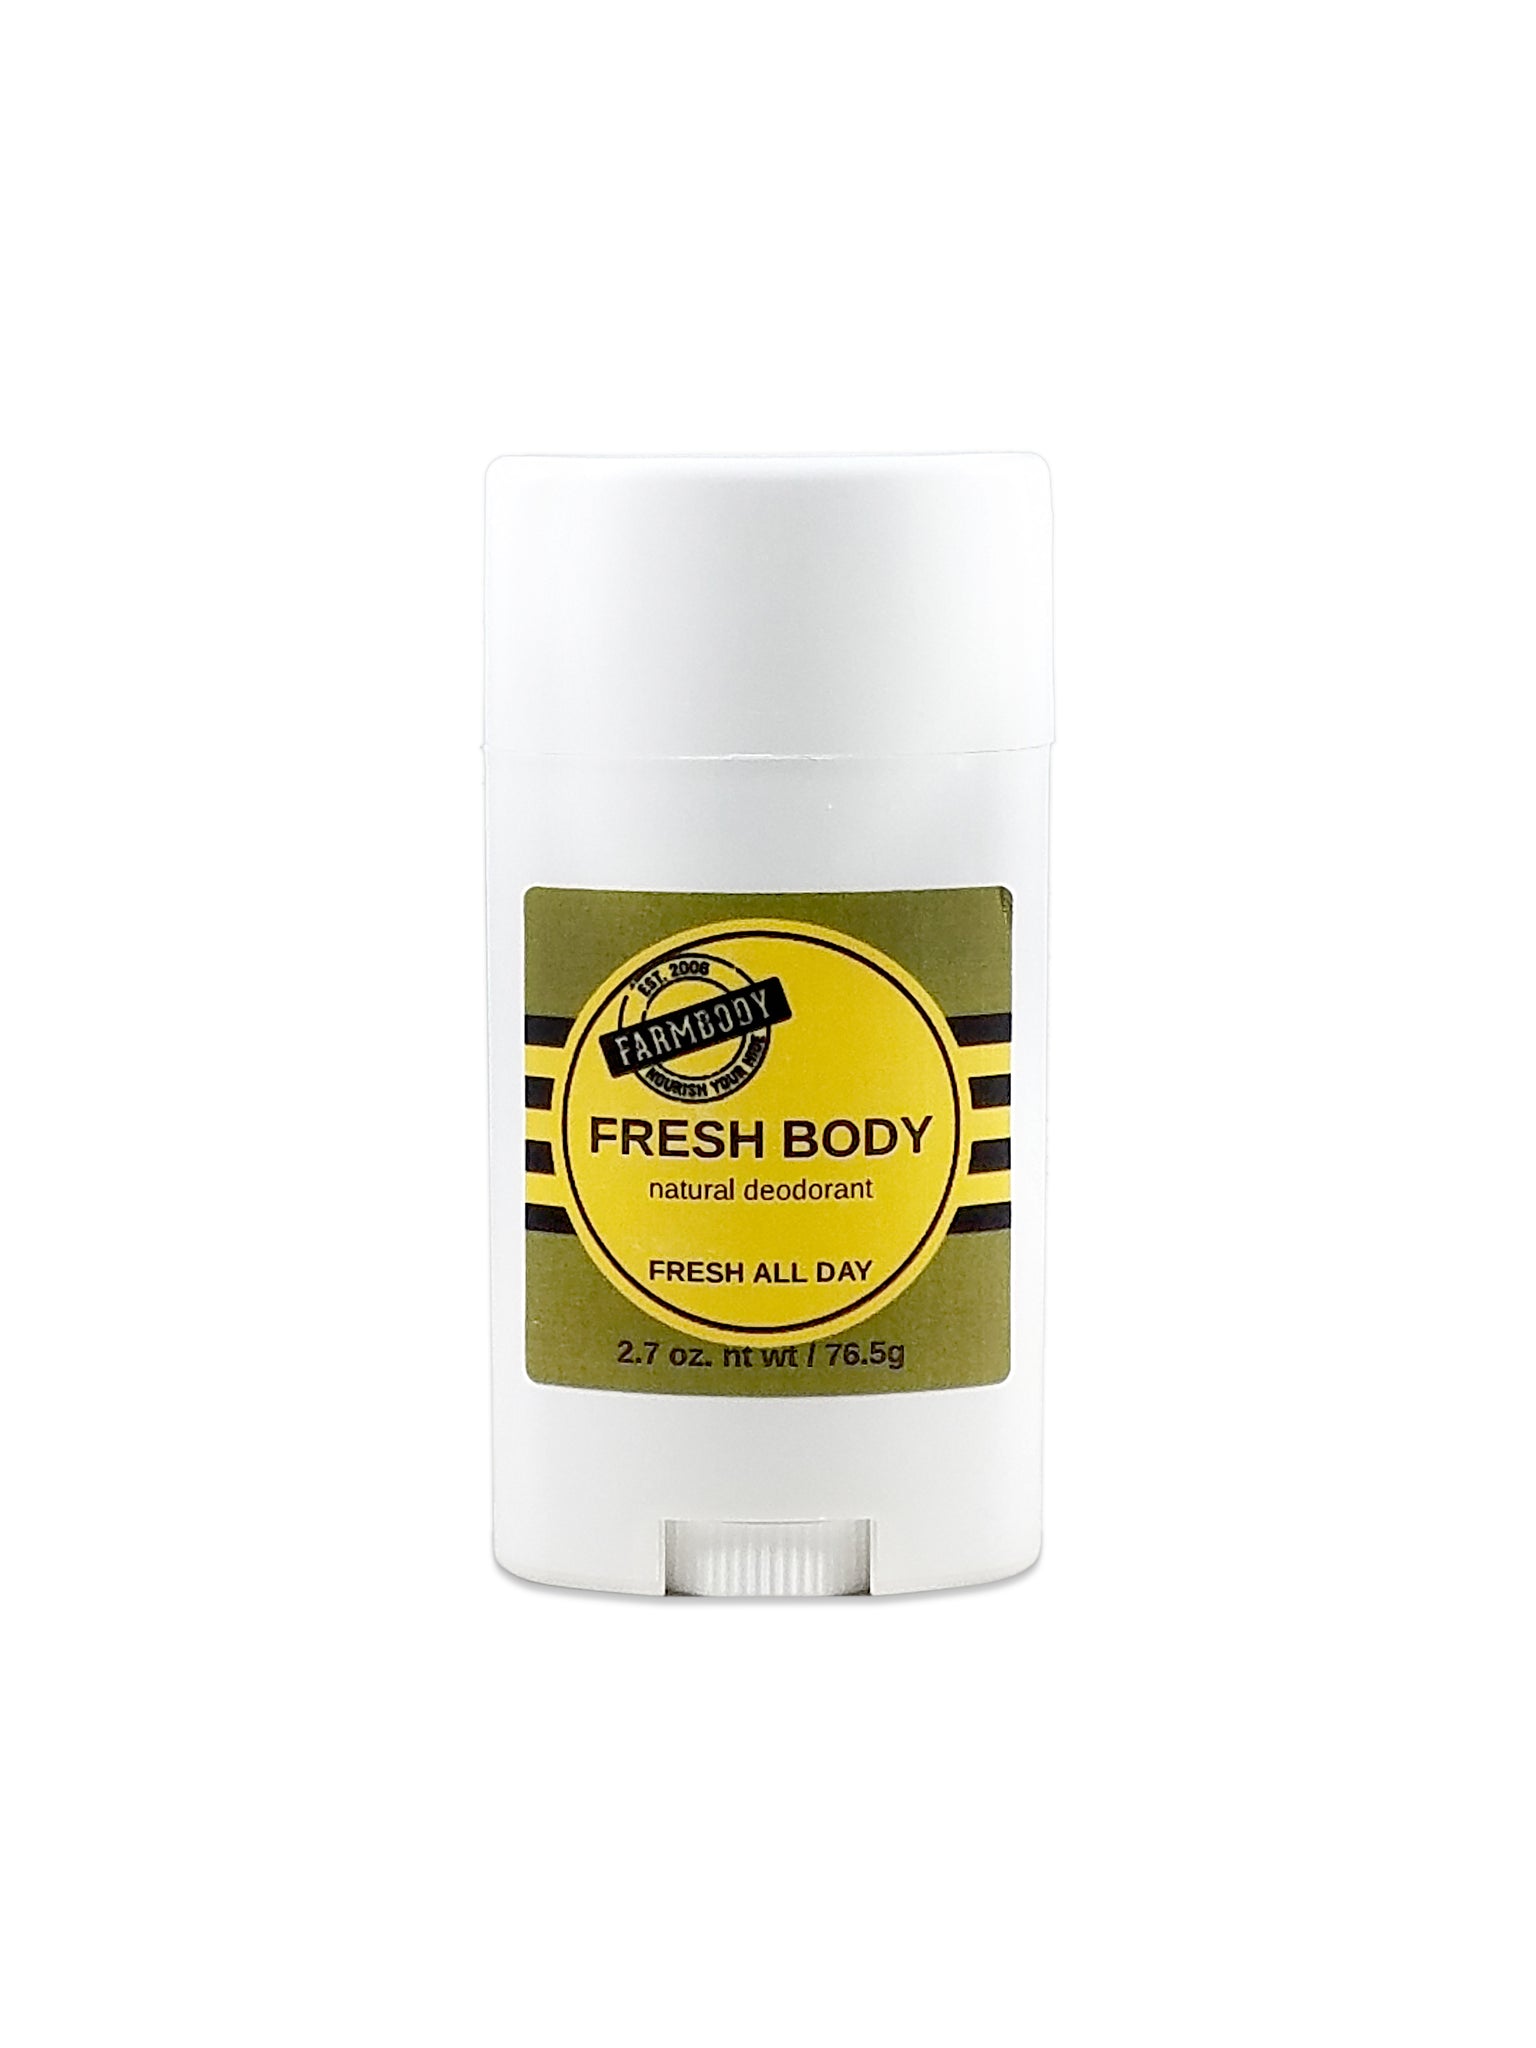 Natural Deodorant, Fresh Body - Farmbody